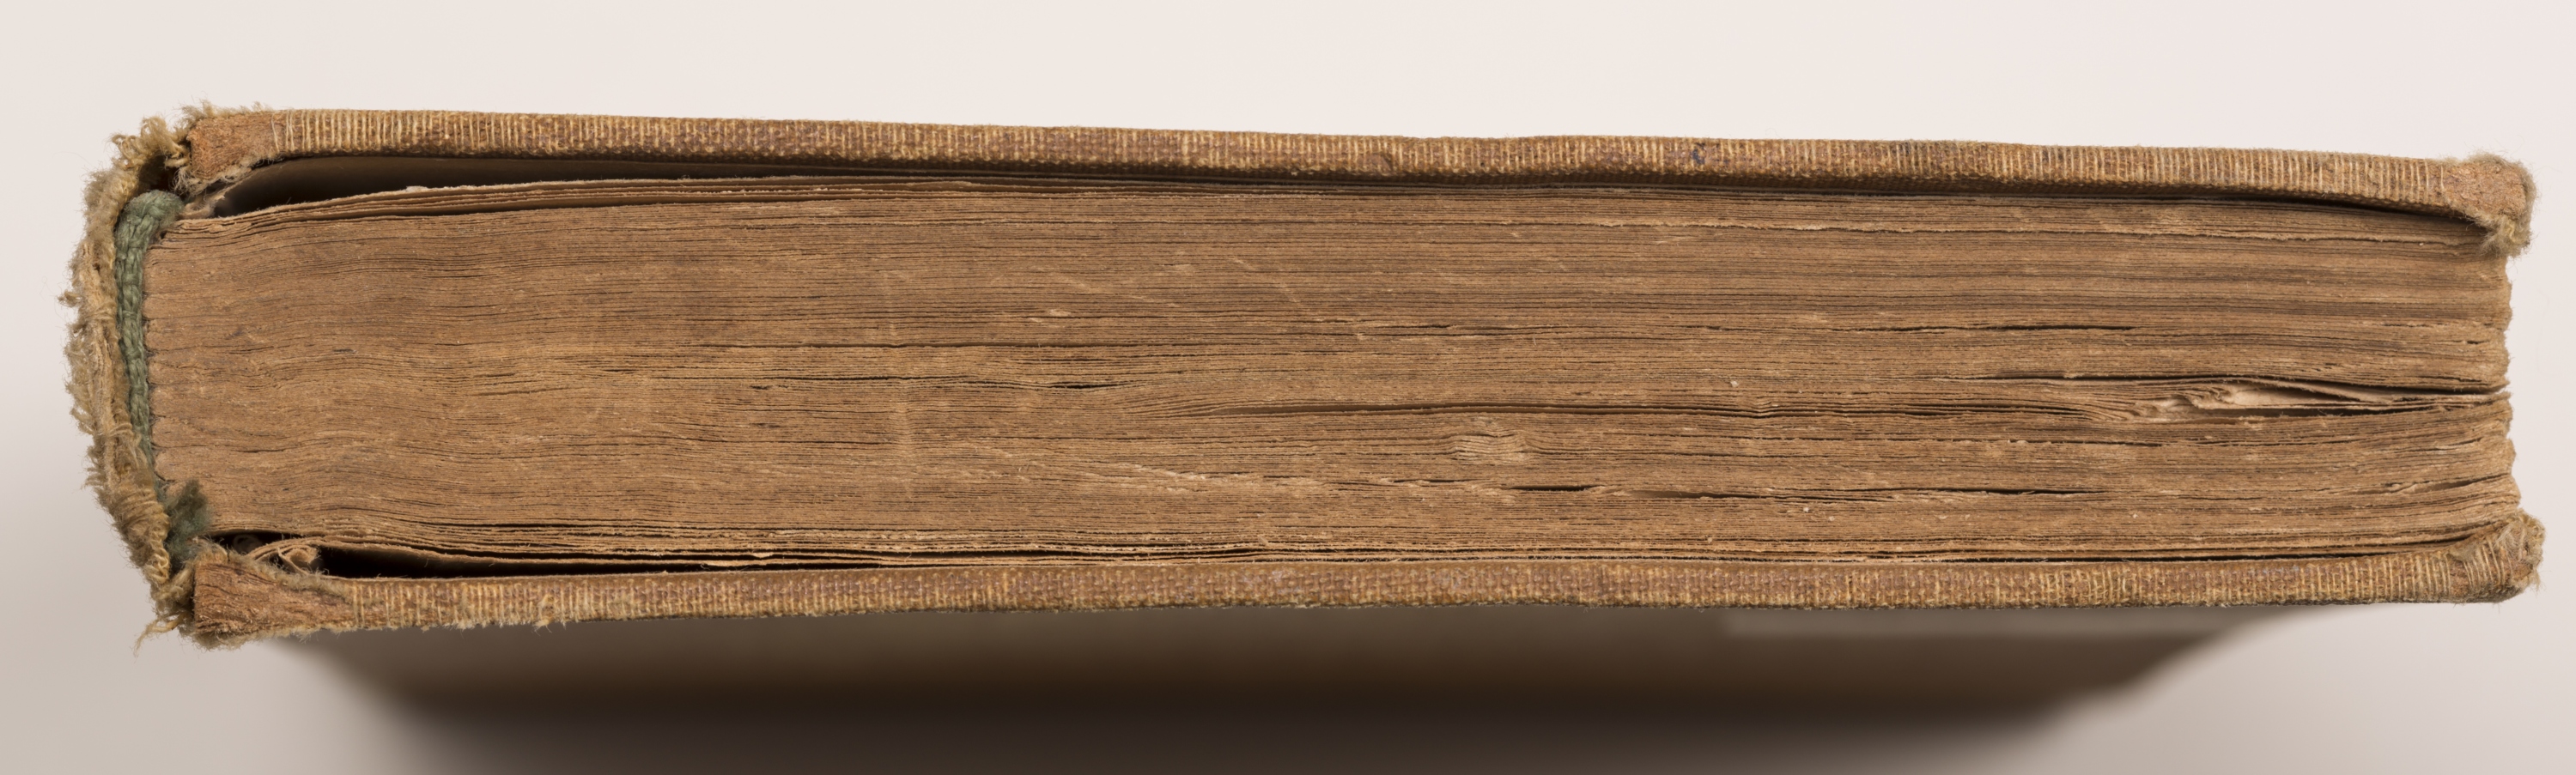 Book side. Book Side texture. Торец книги текстура. Текстуры боковых сторон книг. Берты вид сбоку текстура.